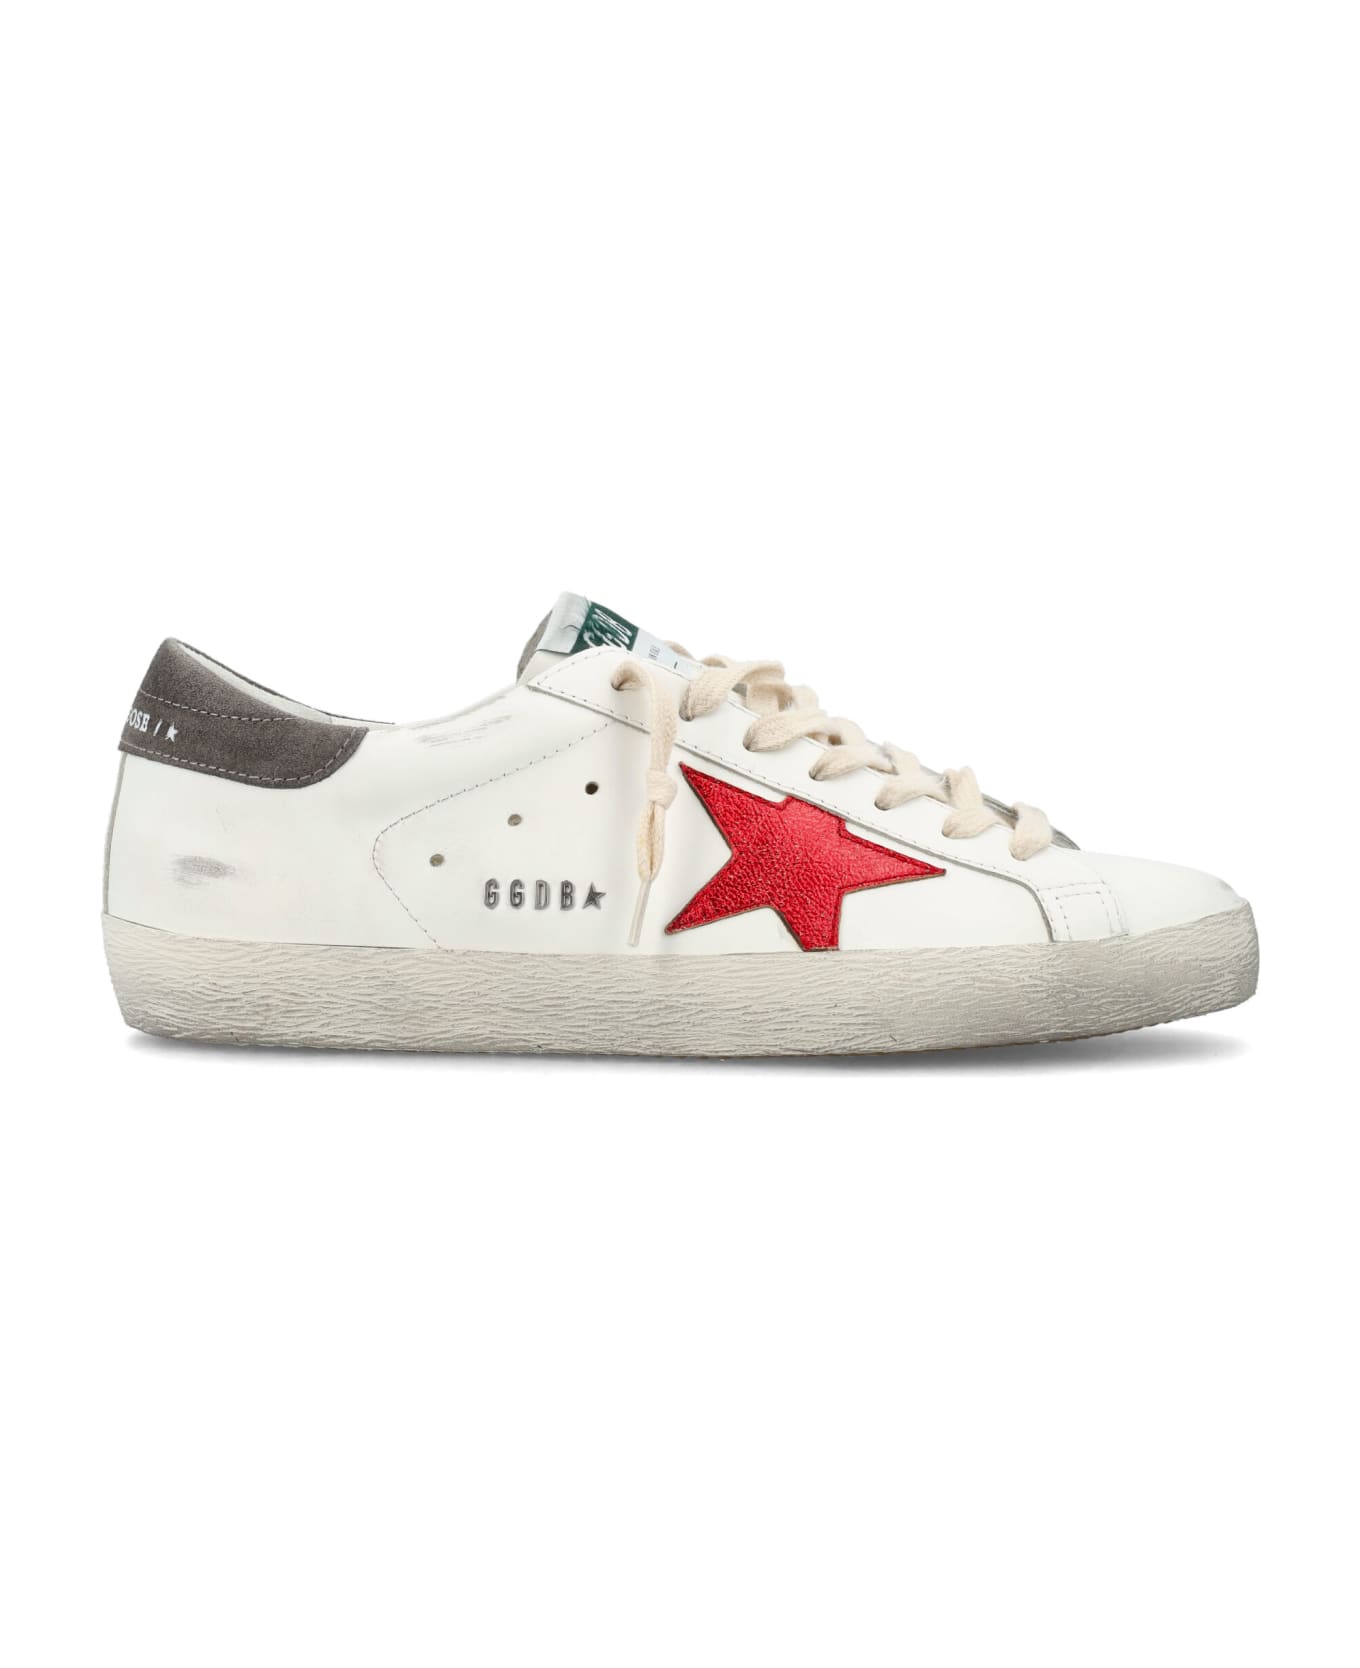 Golden Goose Super Star Sneakers - White/Red/Dark Grey